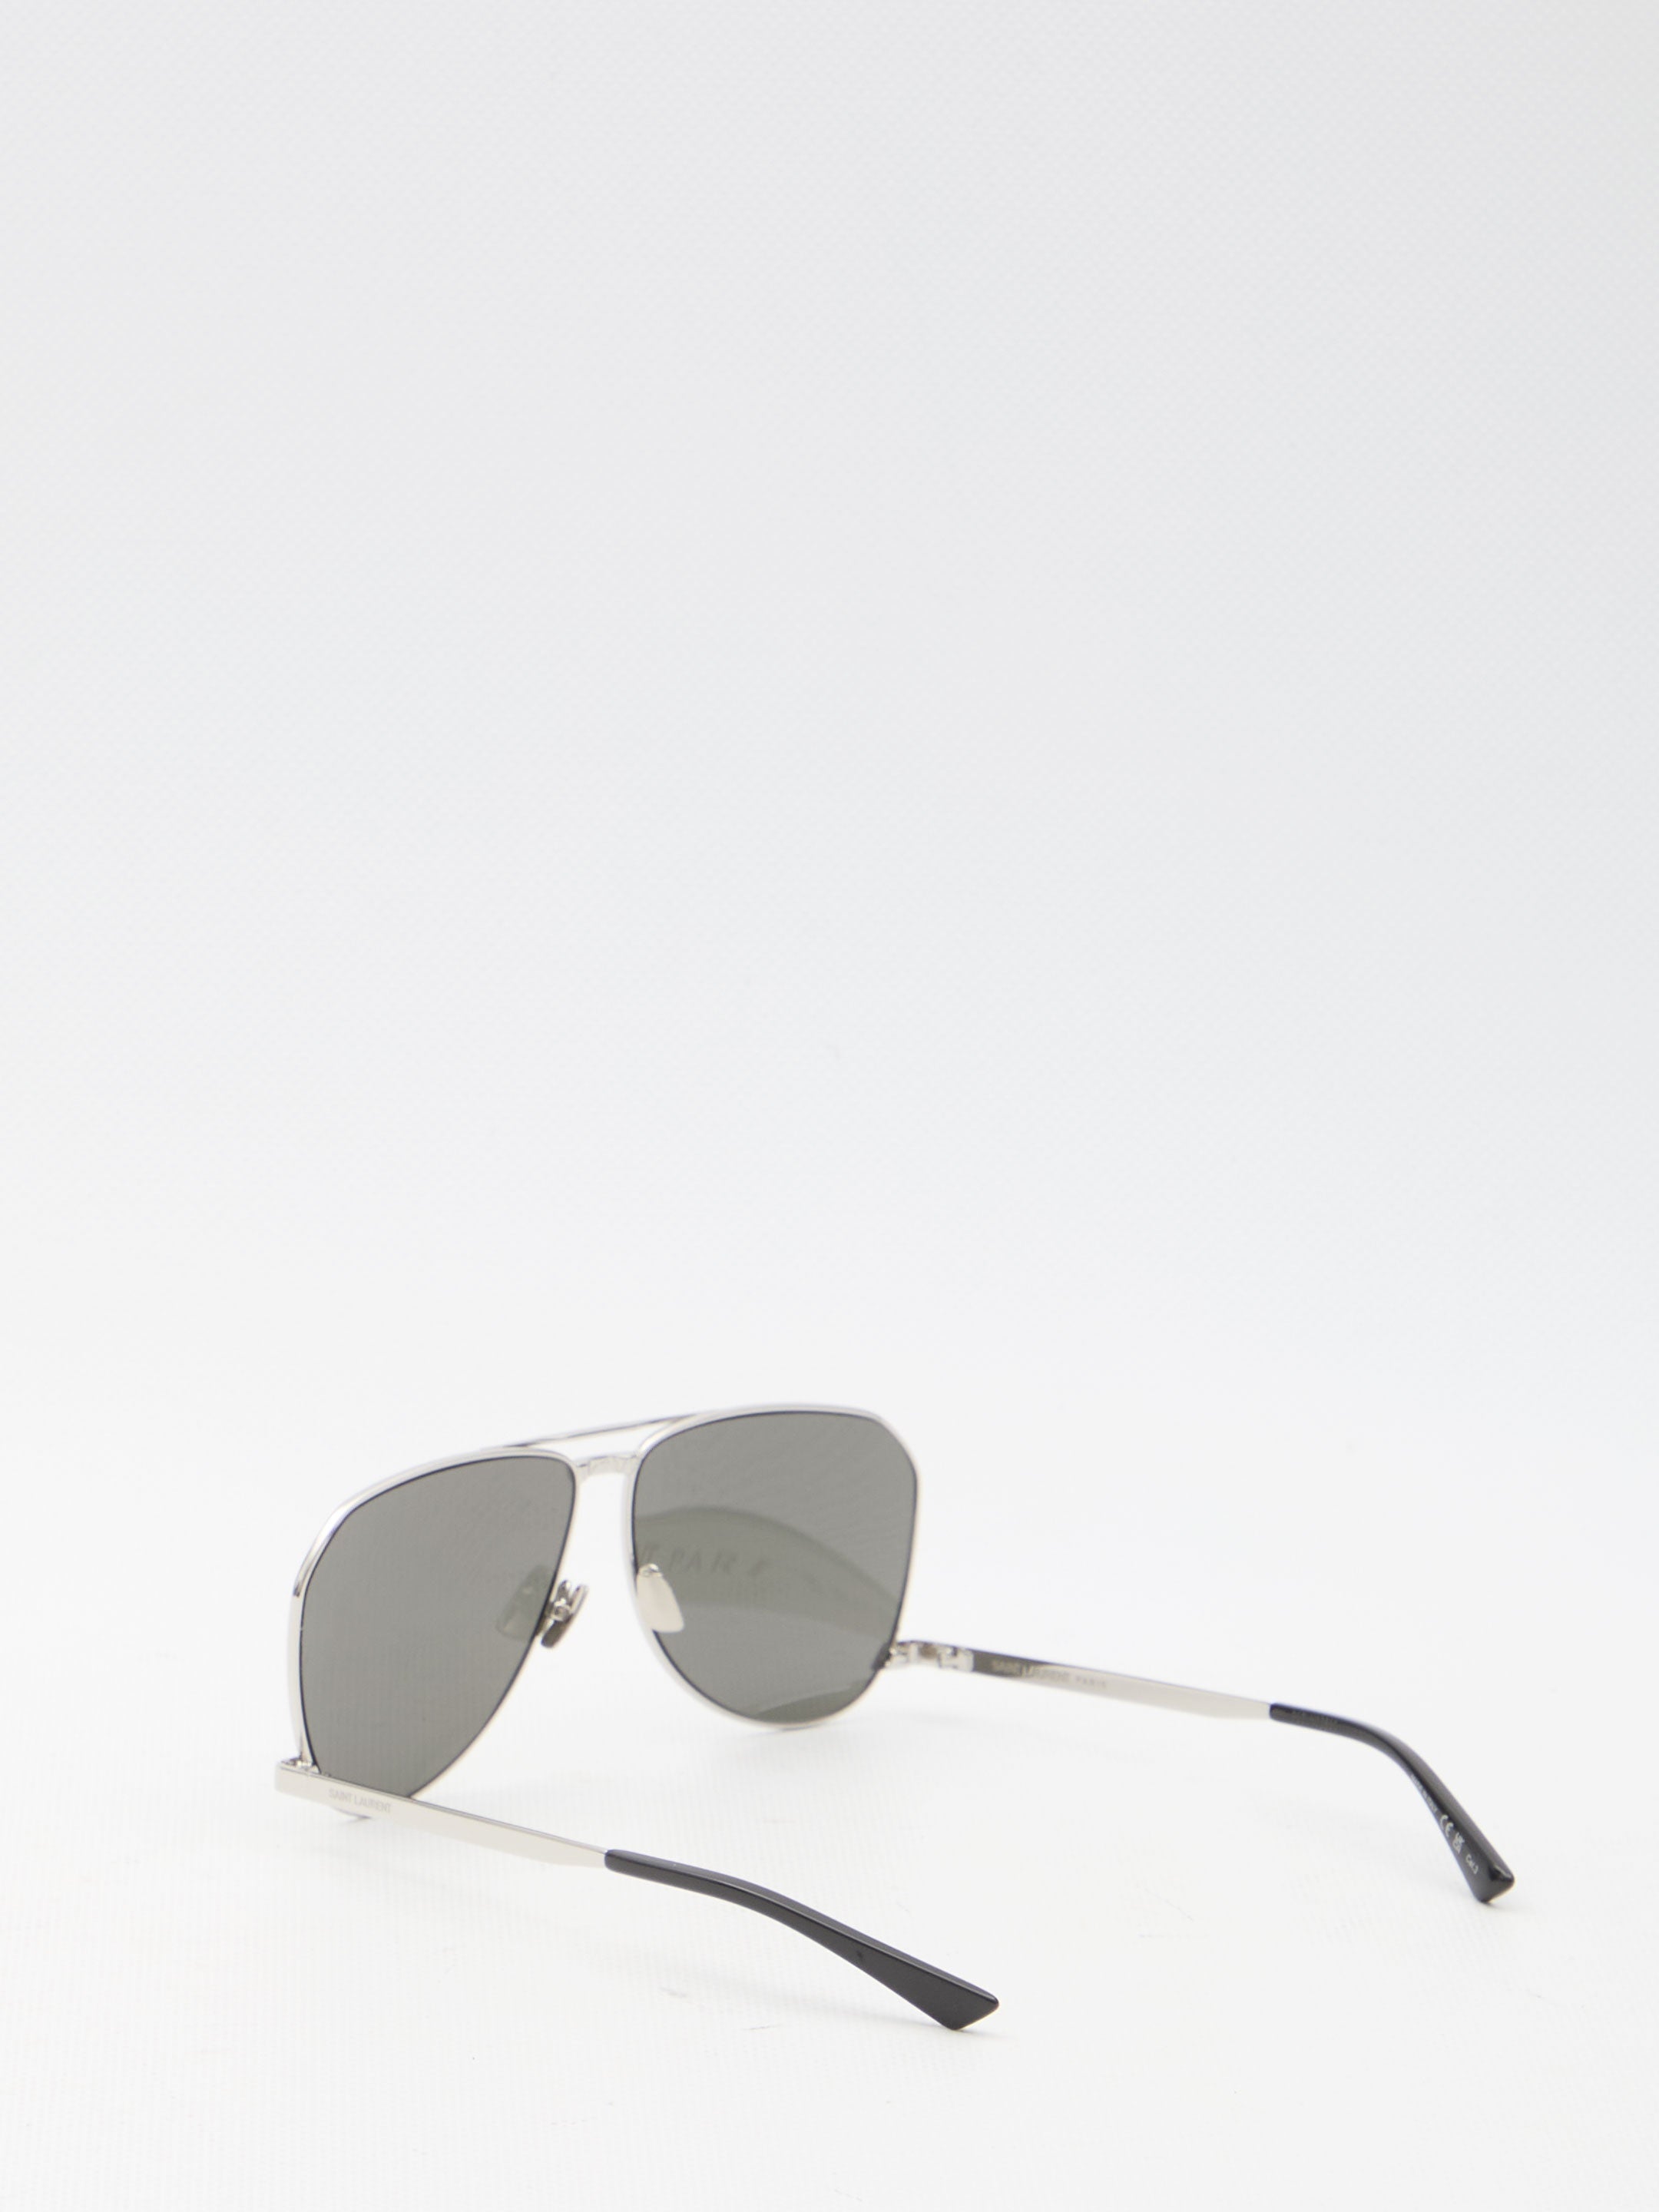 SL 690 Dust sunglasses